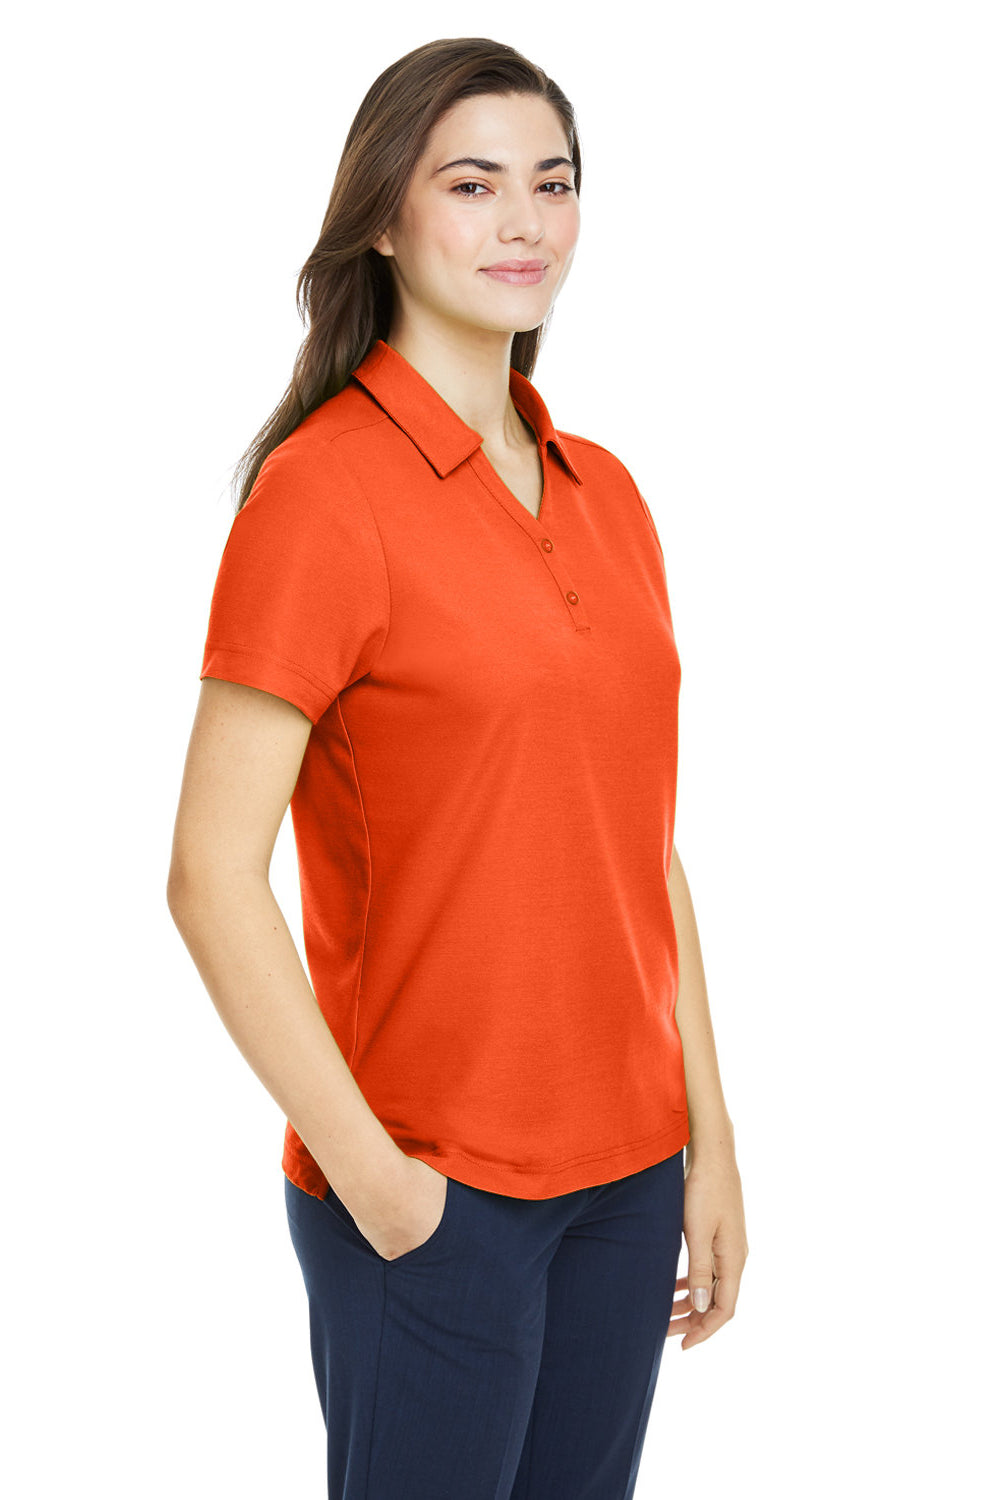 Core 365 CE112W Womens Fusion ChromaSoft Performance Moisture Wicking Pique Short Sleeve Polo Shirt Campus Orange 3Q